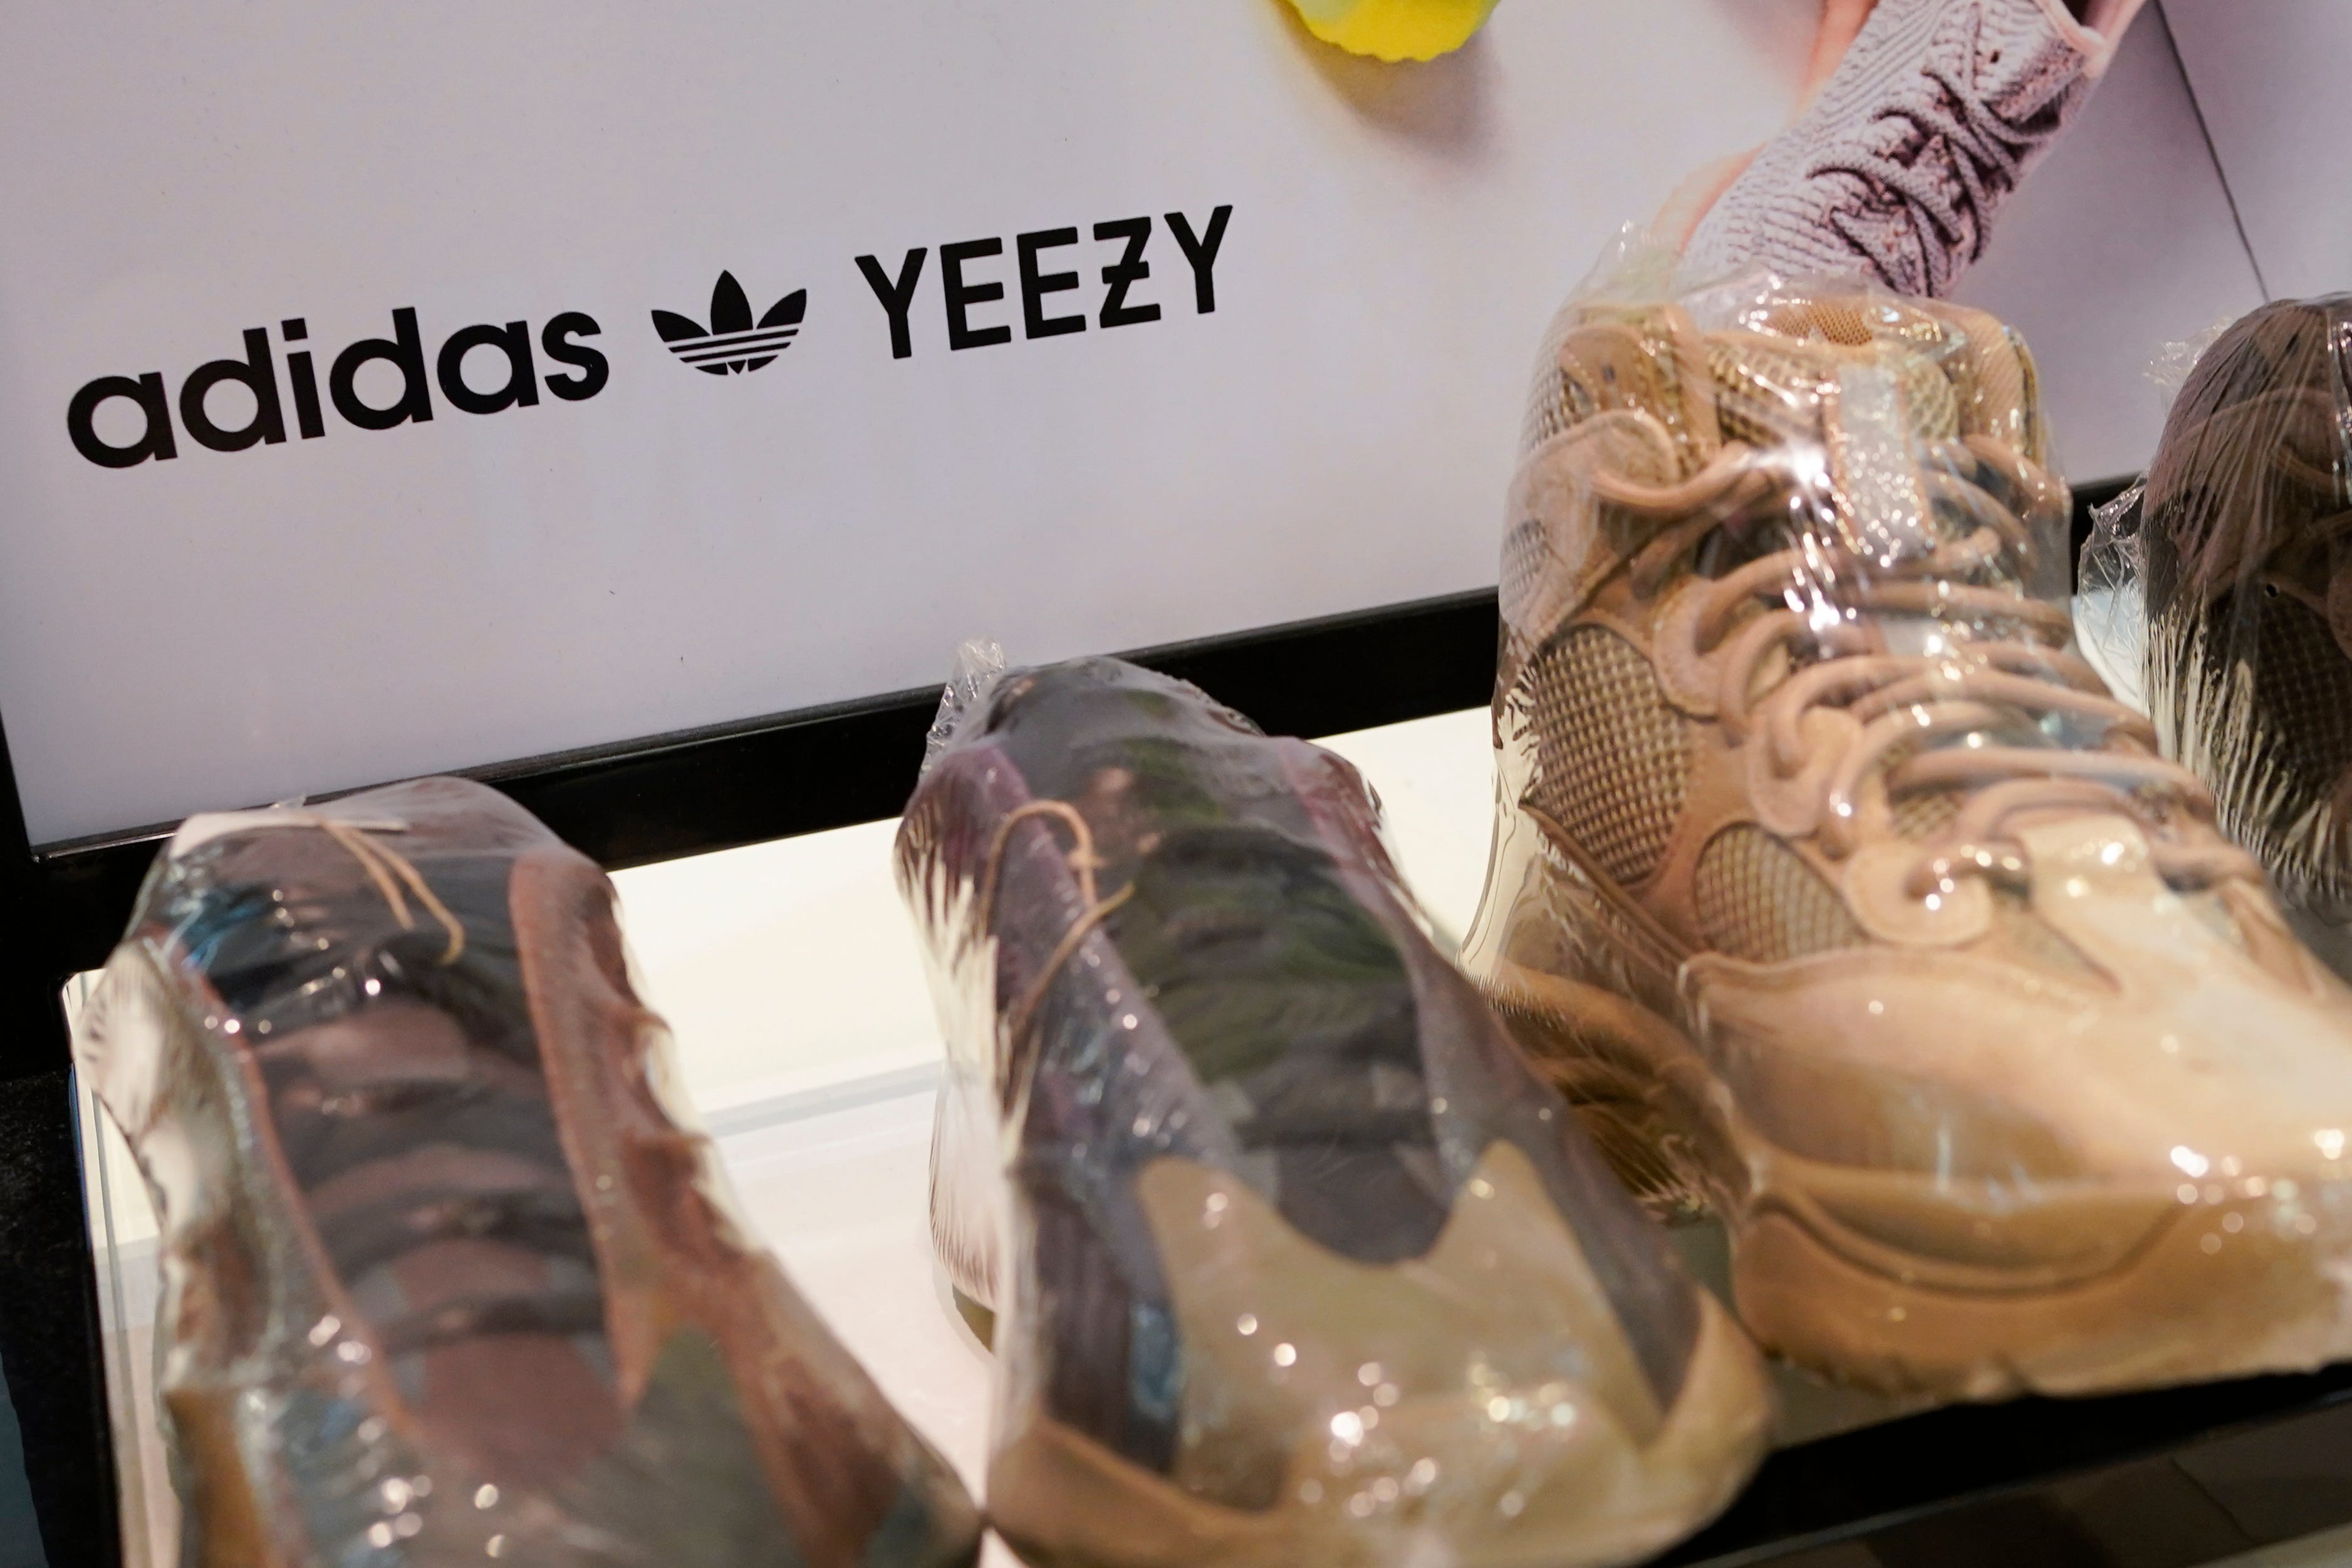 En effektiv edderkop Klappe Adidas says dropping Ye's Yeezy shoes could cost it over $1 billion